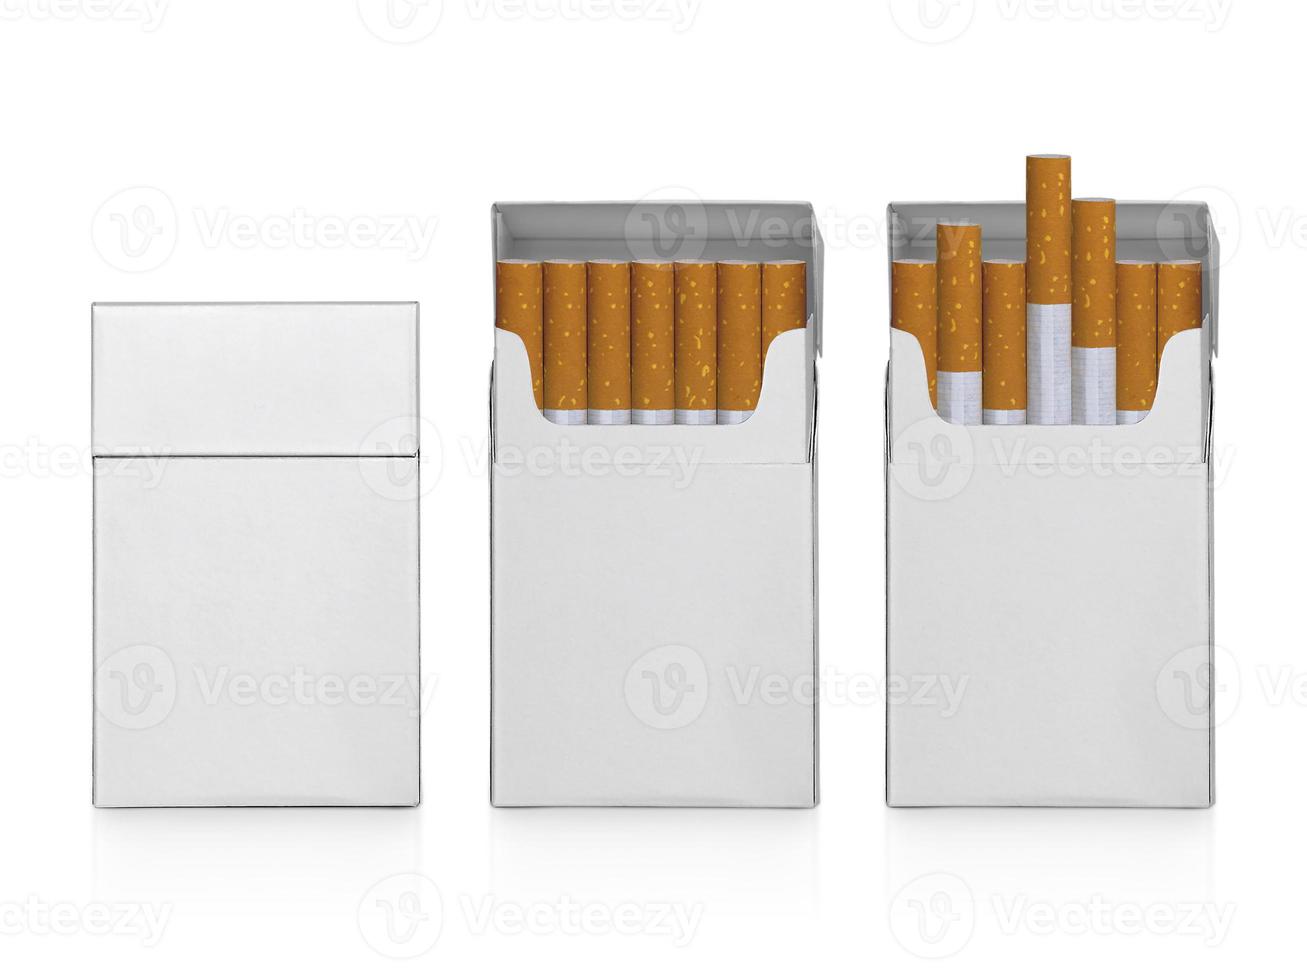 paket cigaretter isolerad på vit bakgrund foto